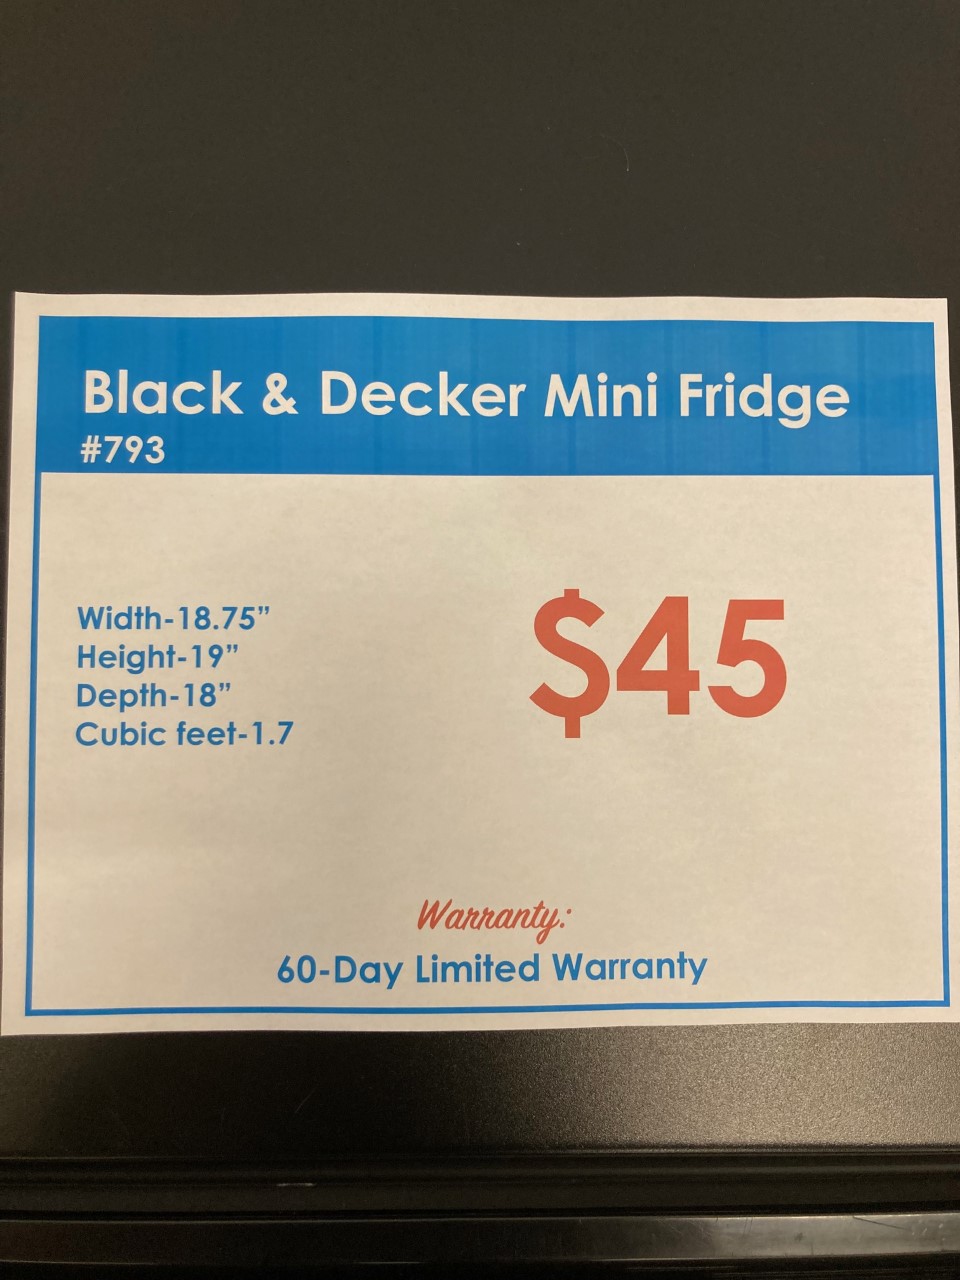 Black & Decker Mini Fridge #793